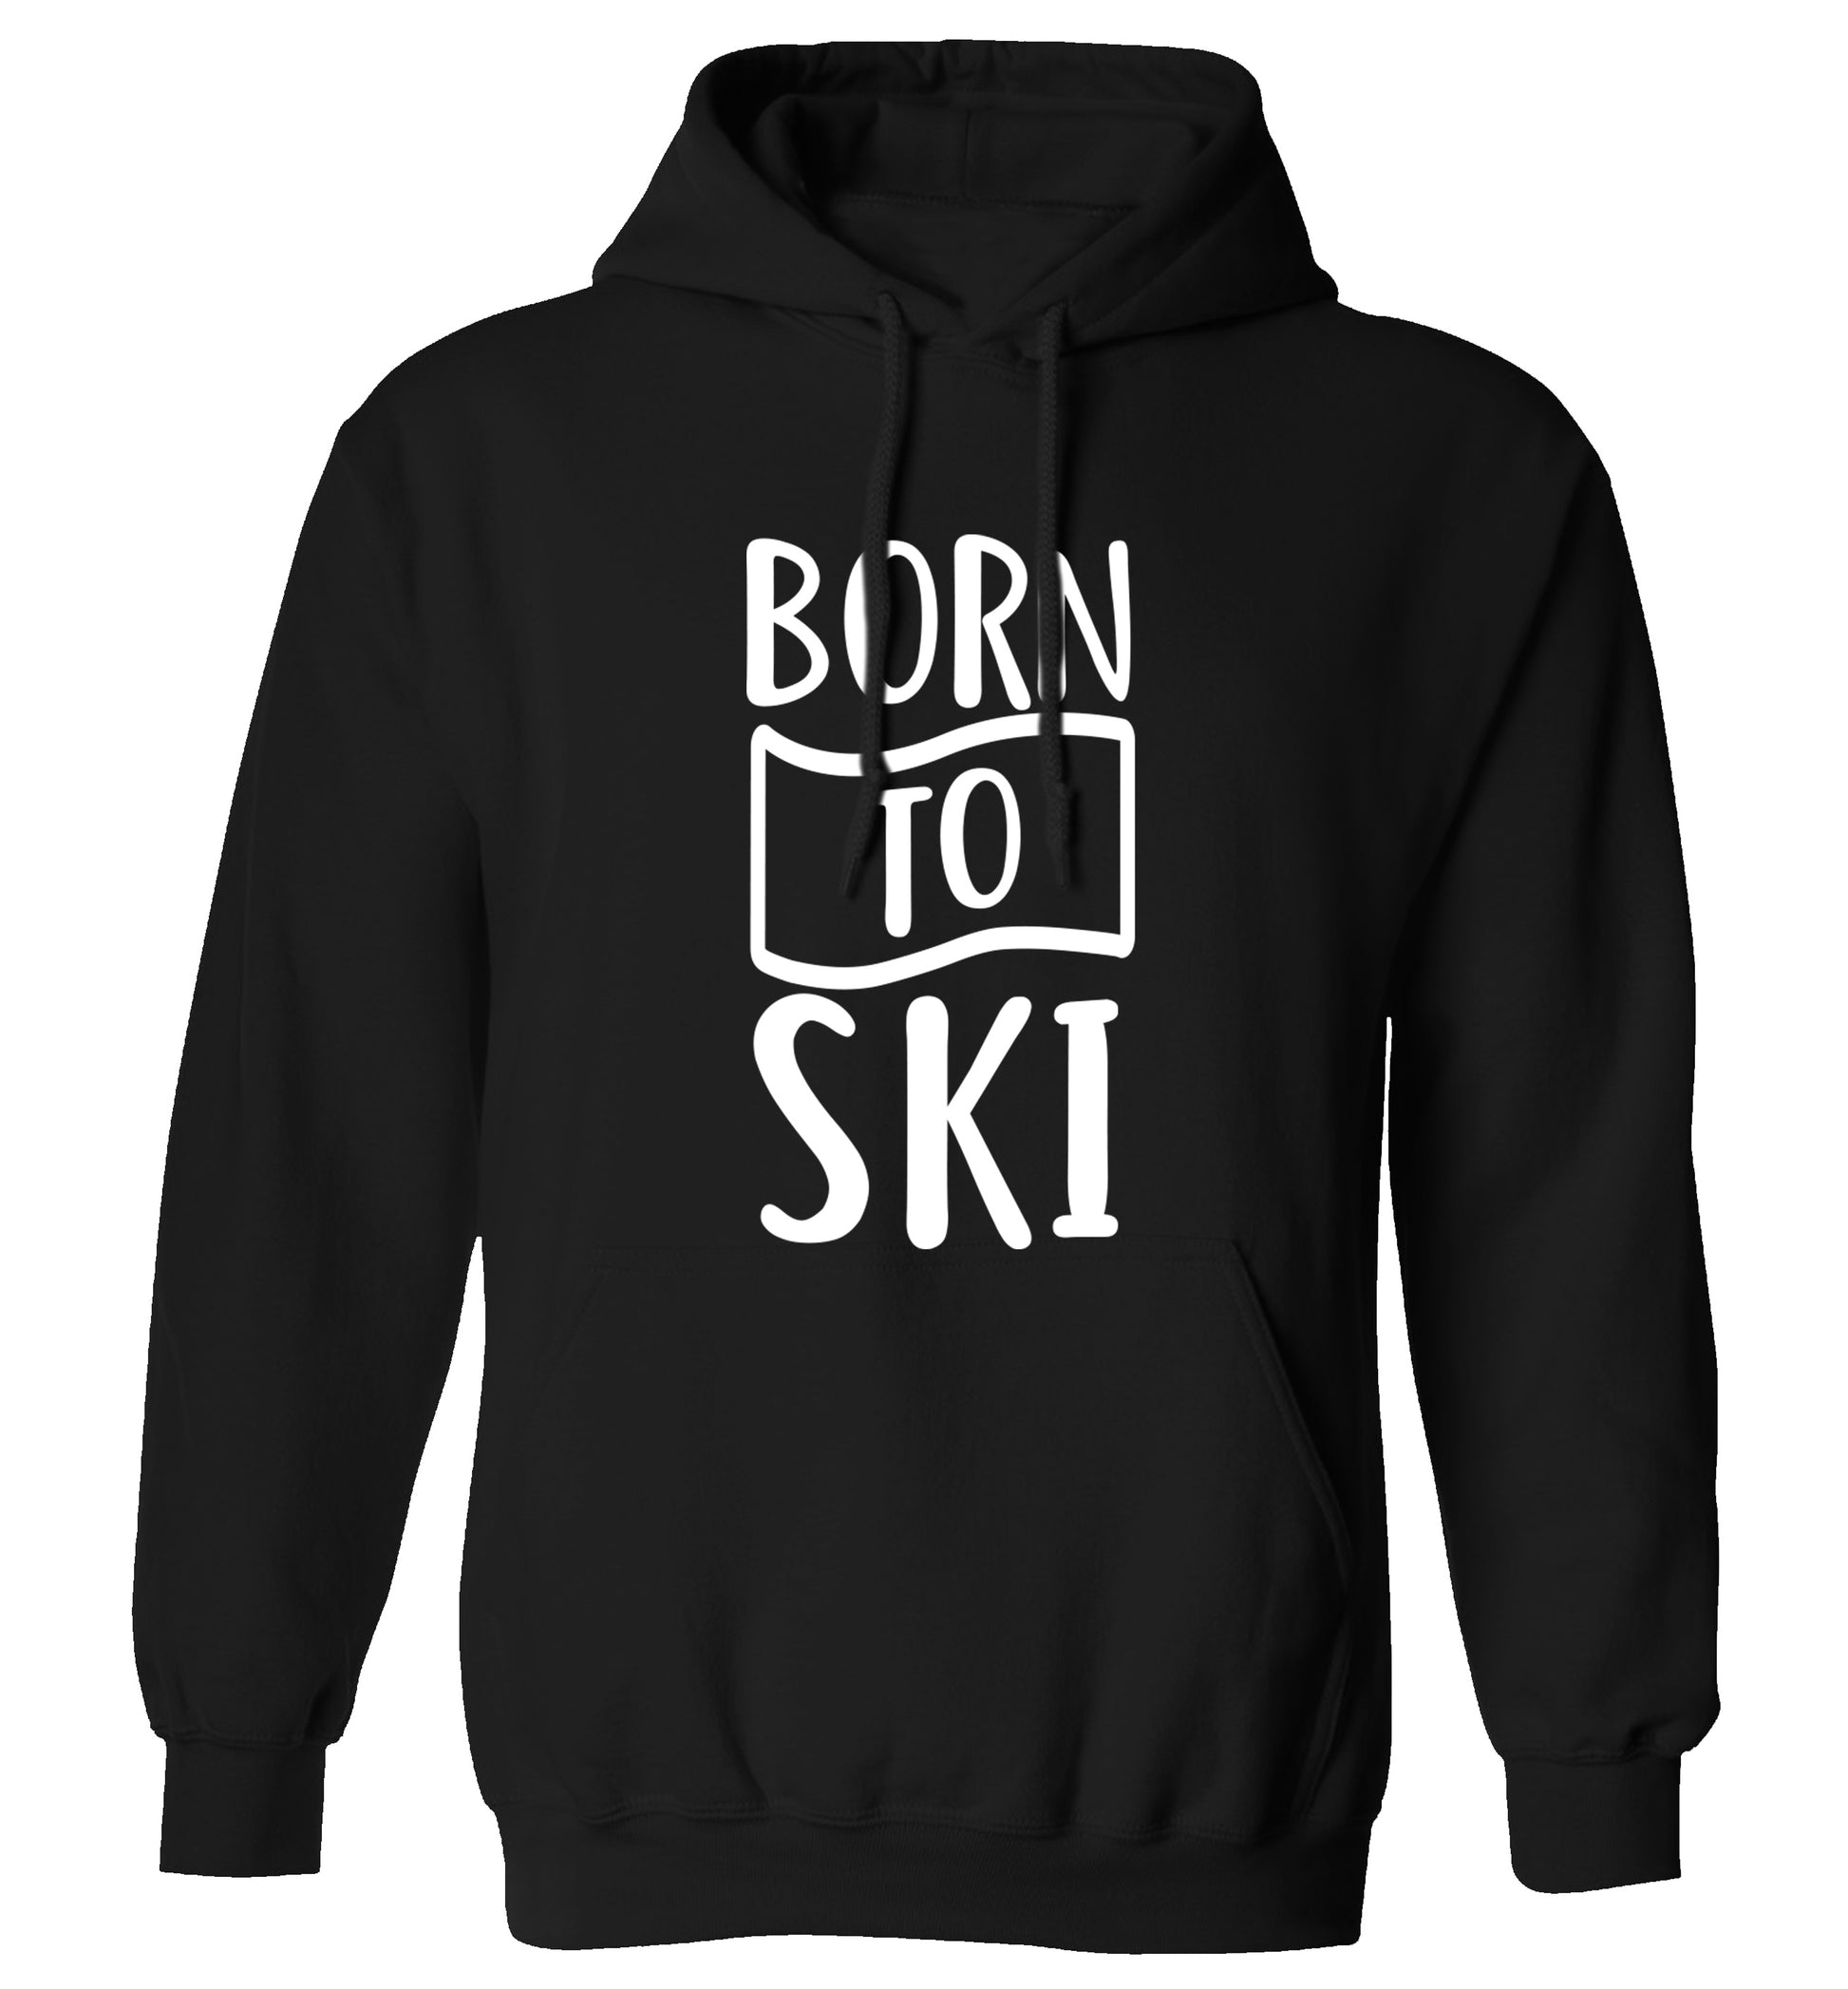 Born to ski adults unisexblack hoodie 2XL